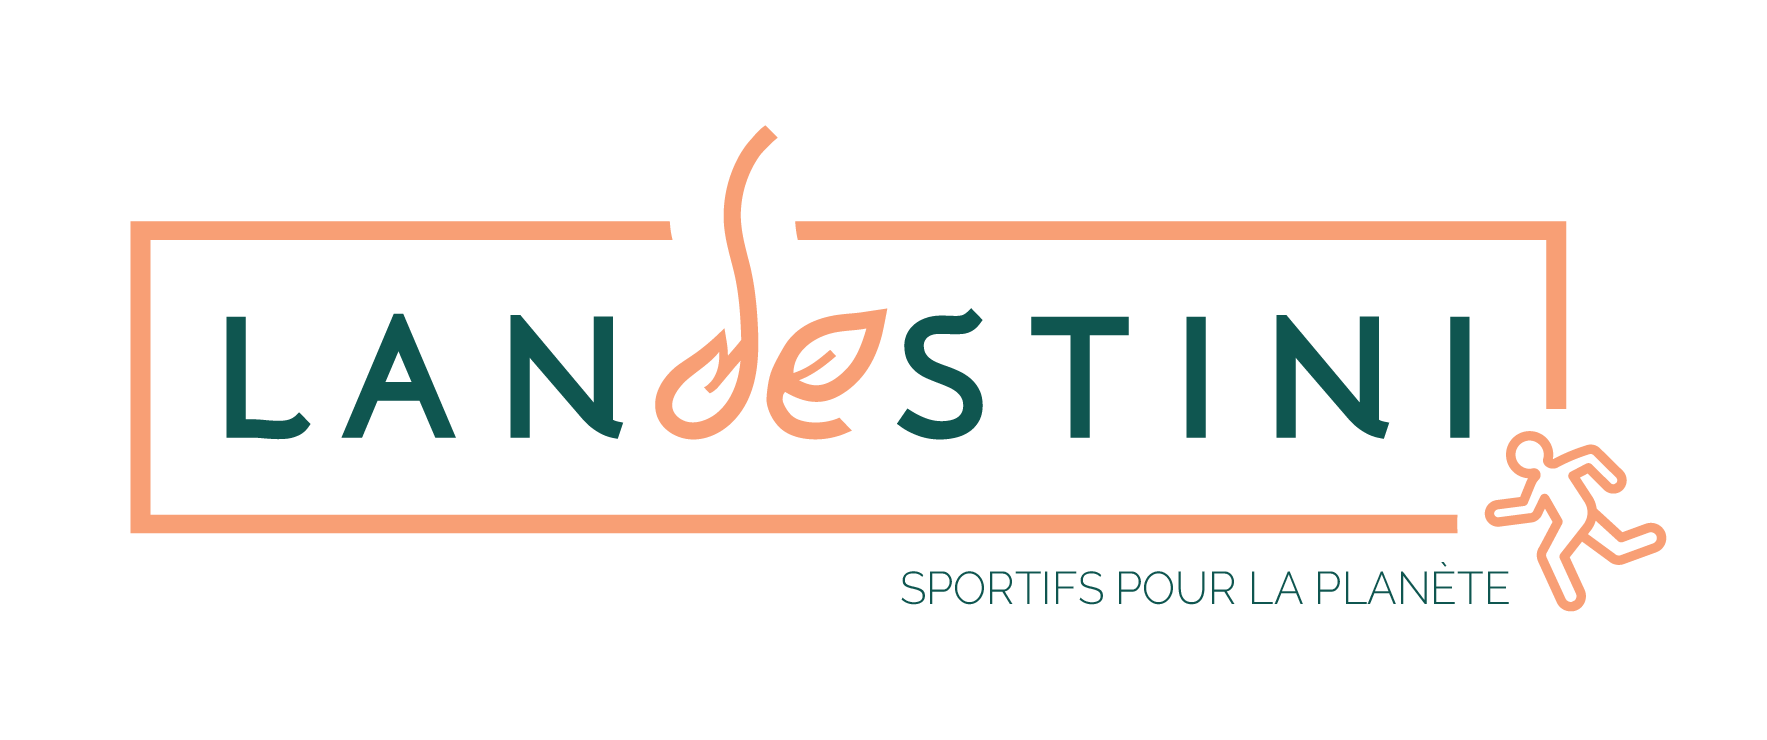 Logo Landestini sport pour la planete rose